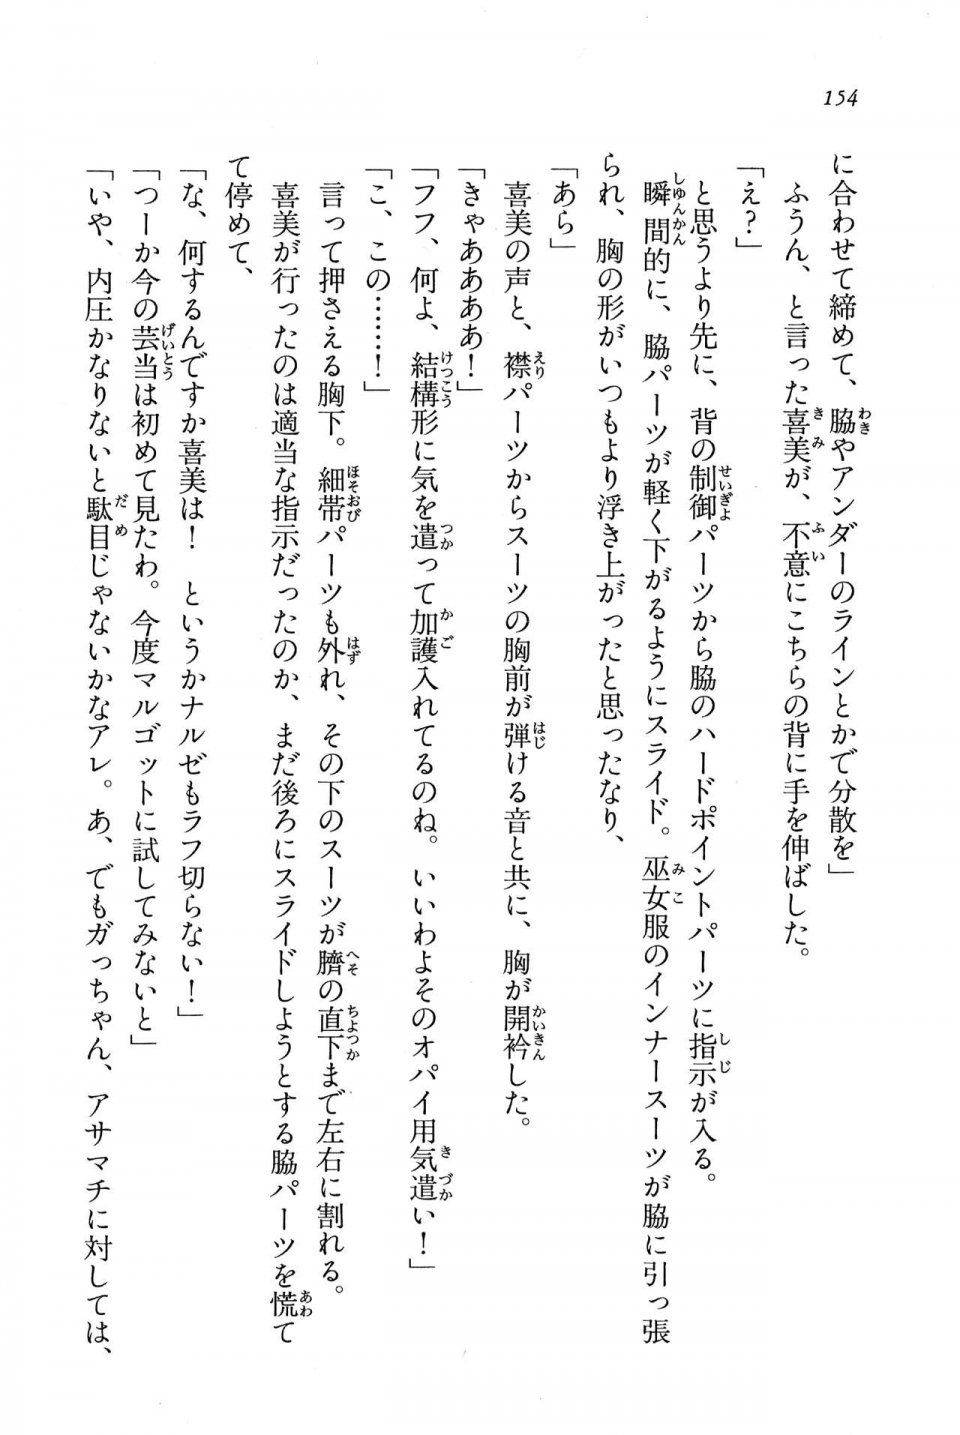 Kyoukai Senjou no Horizon BD Special Mininovel Vol 7(4A) - Photo #158